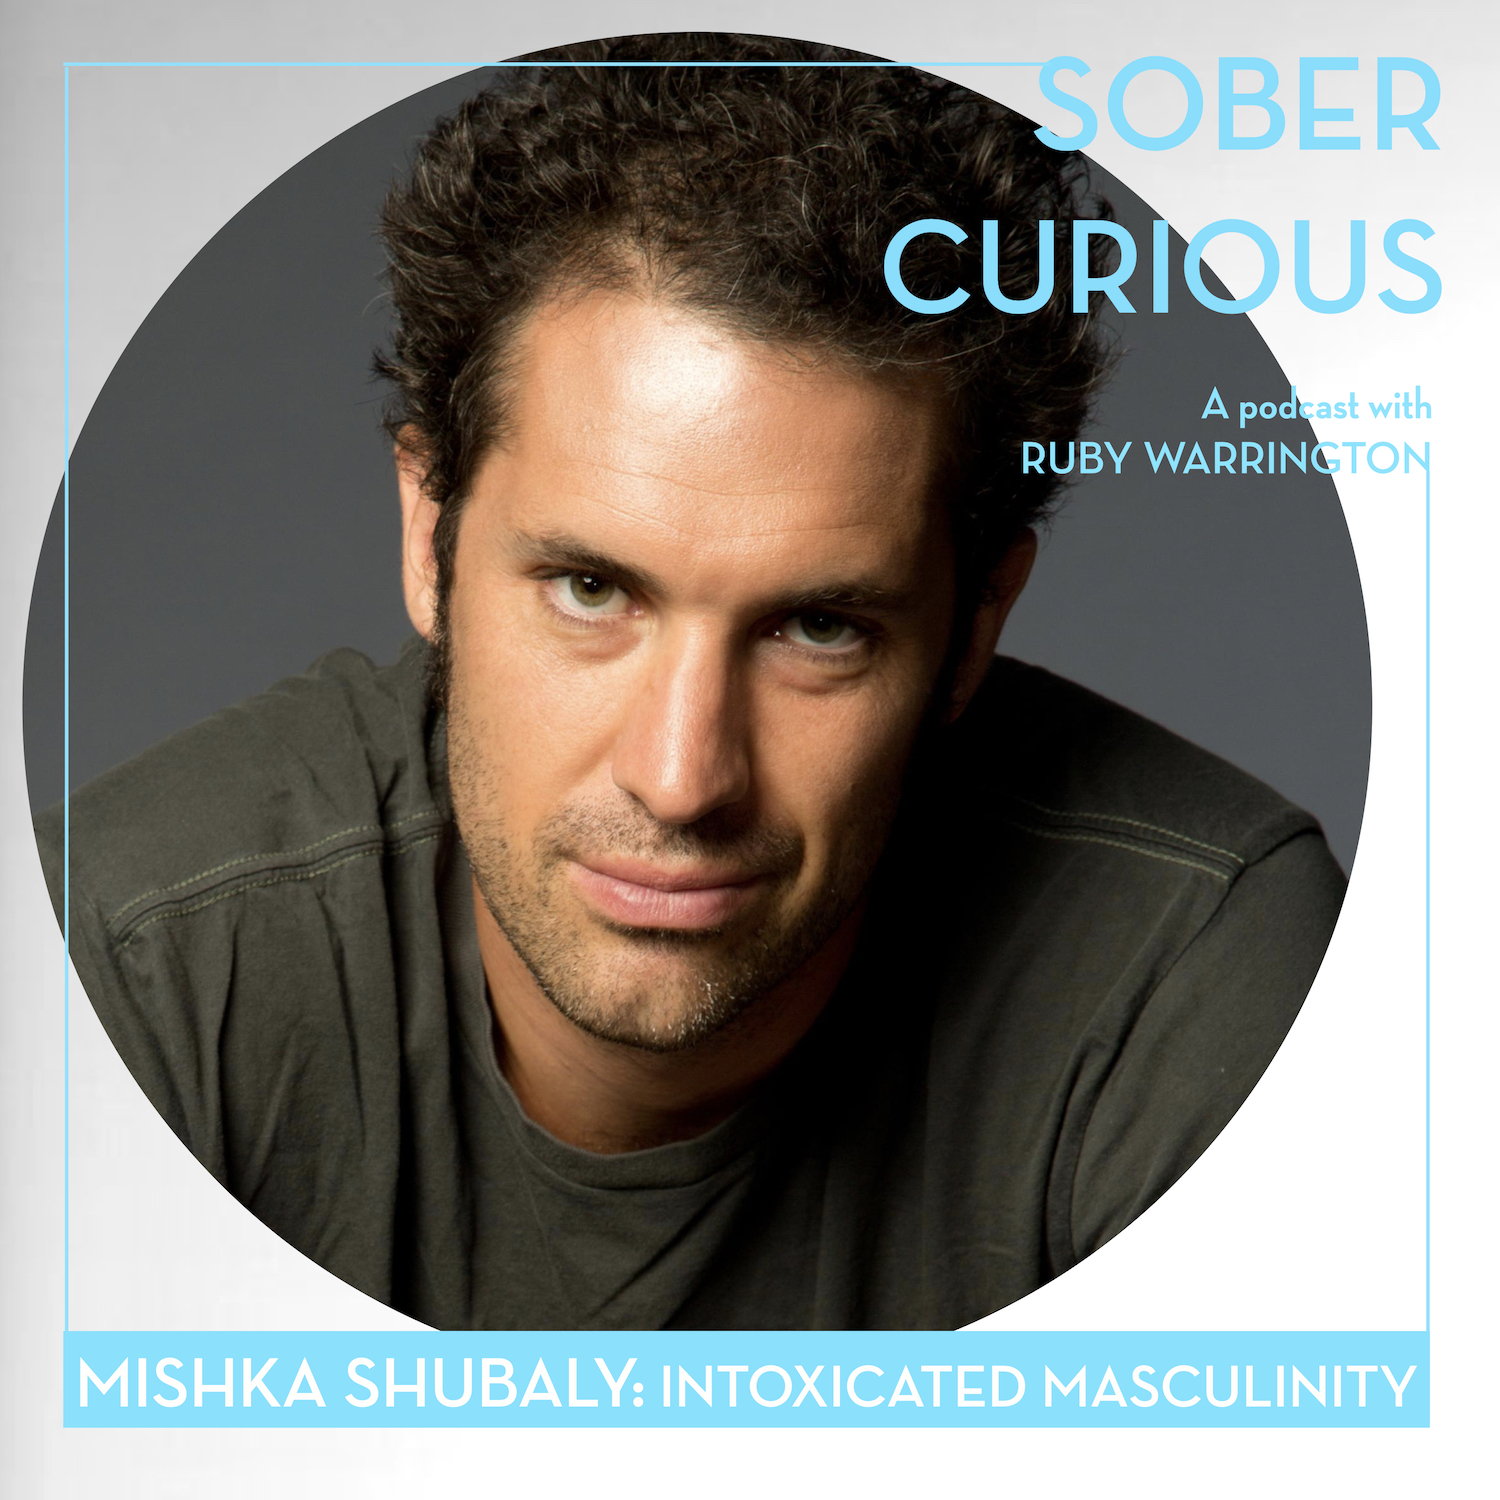 Mishka Shubaly sober curious podcast ruby warrington